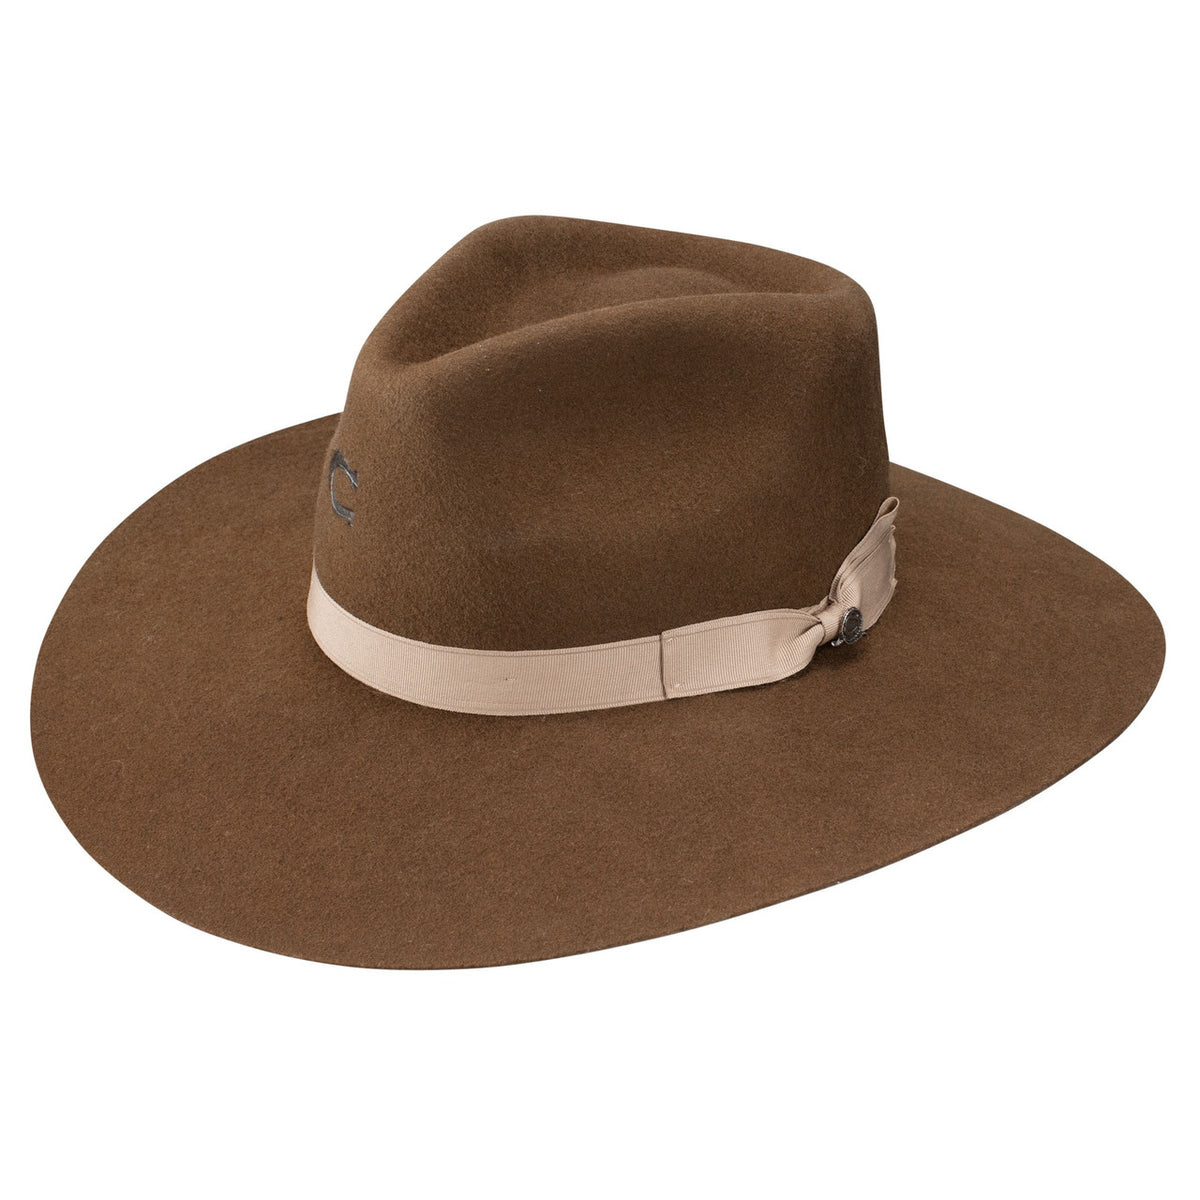 Charlie 1 Horse “Highway Acorn” Hat